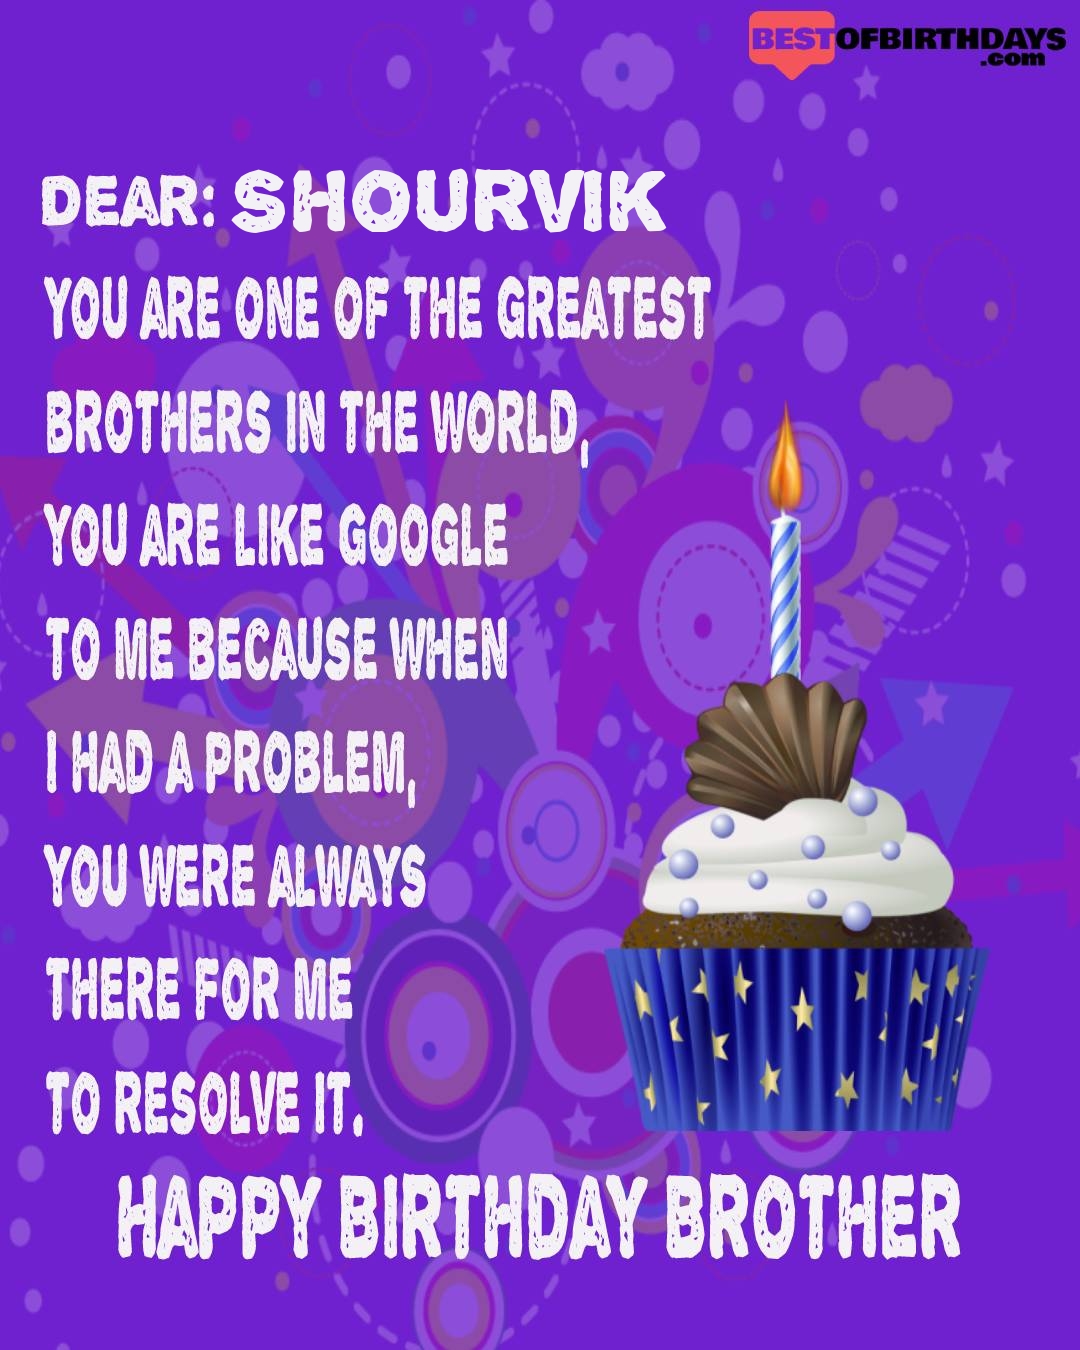 Happy birthday shourvik bhai brother bro